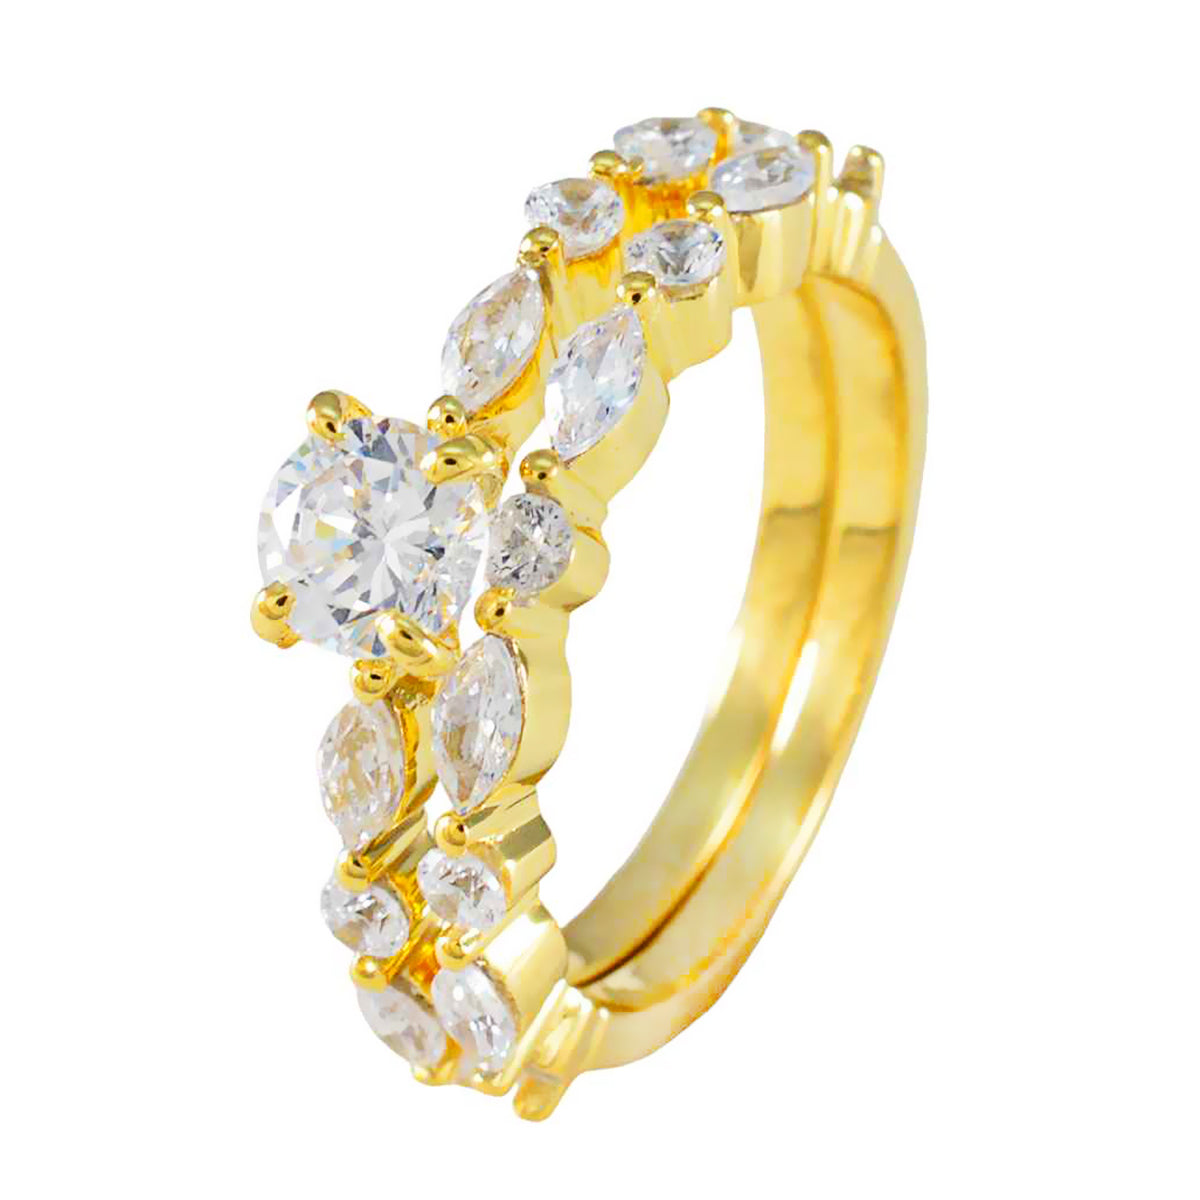 Riyo Rare Silver Ring With Yellow Gold Plating White CZ Stone Multi Shape Prong Setting Ring